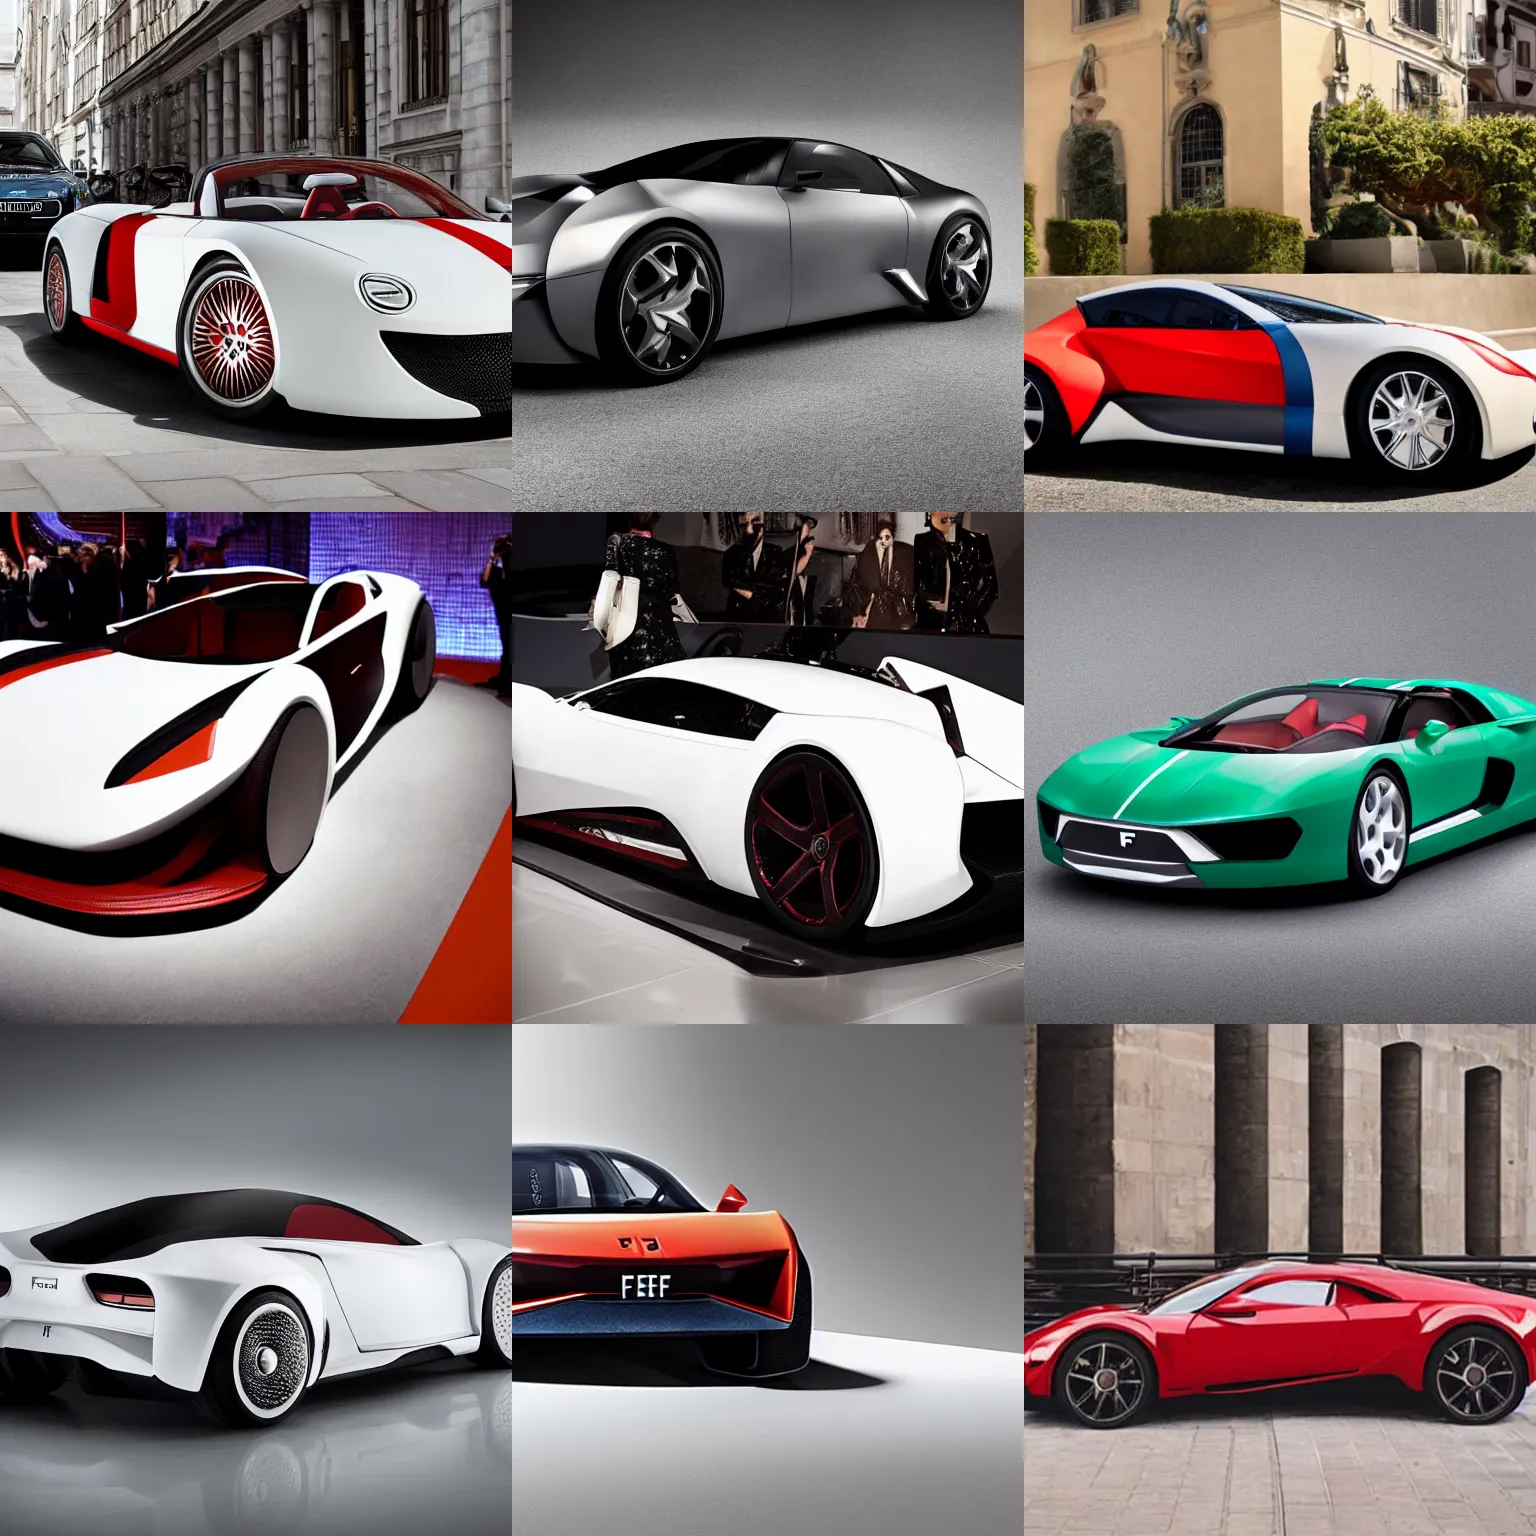 Prompt: designer sports car made by fendi